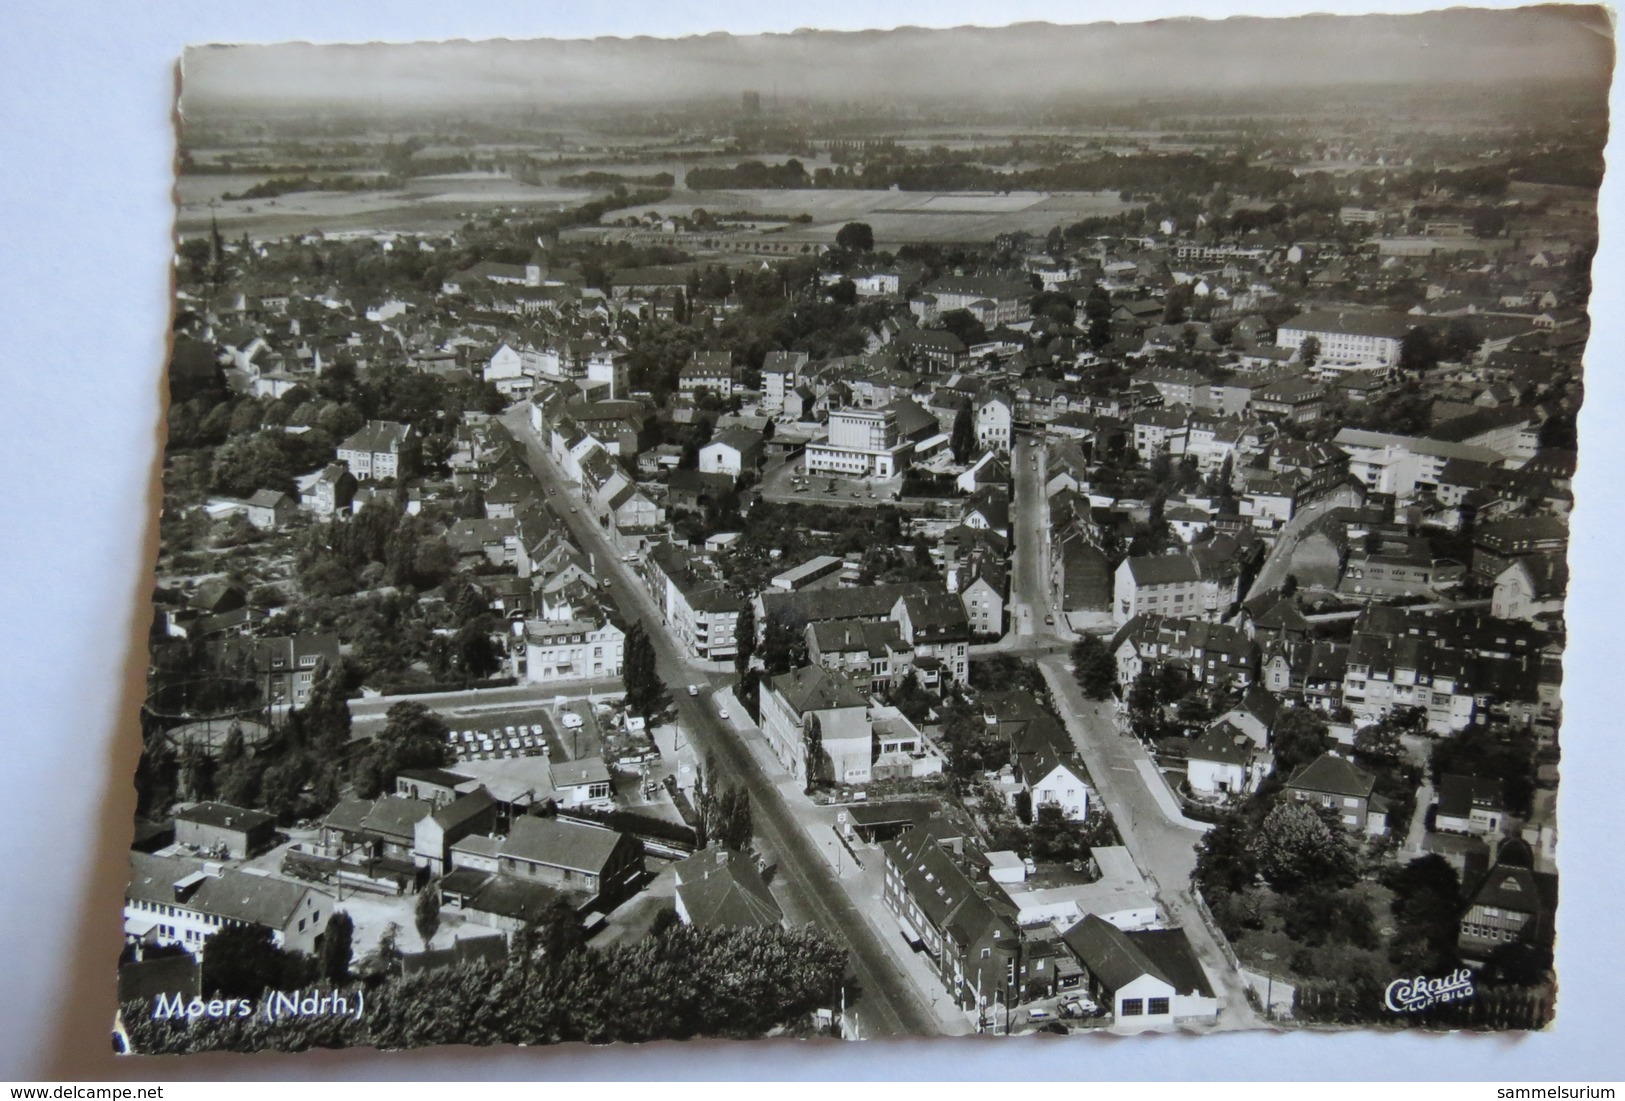 (11/2/39) Postkarte/AK "Moers (Ndrh.)" Panorama - Moers